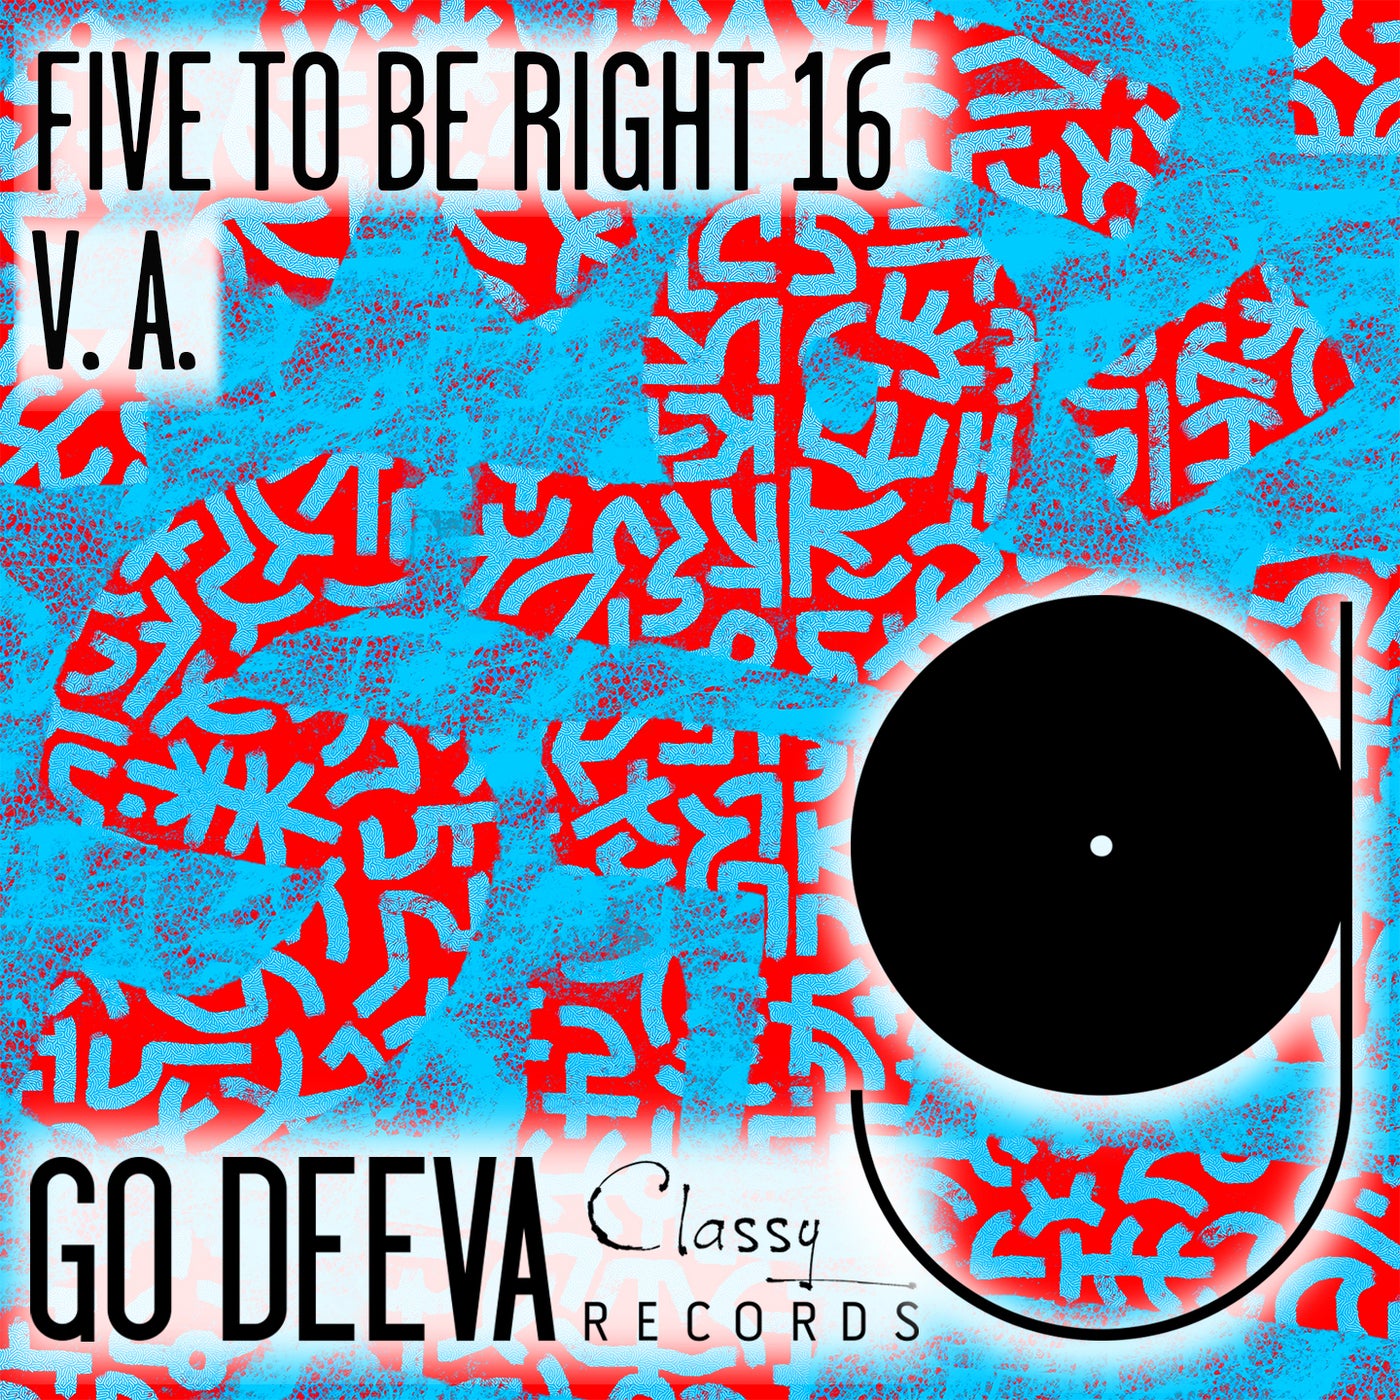 Go Deeva Records